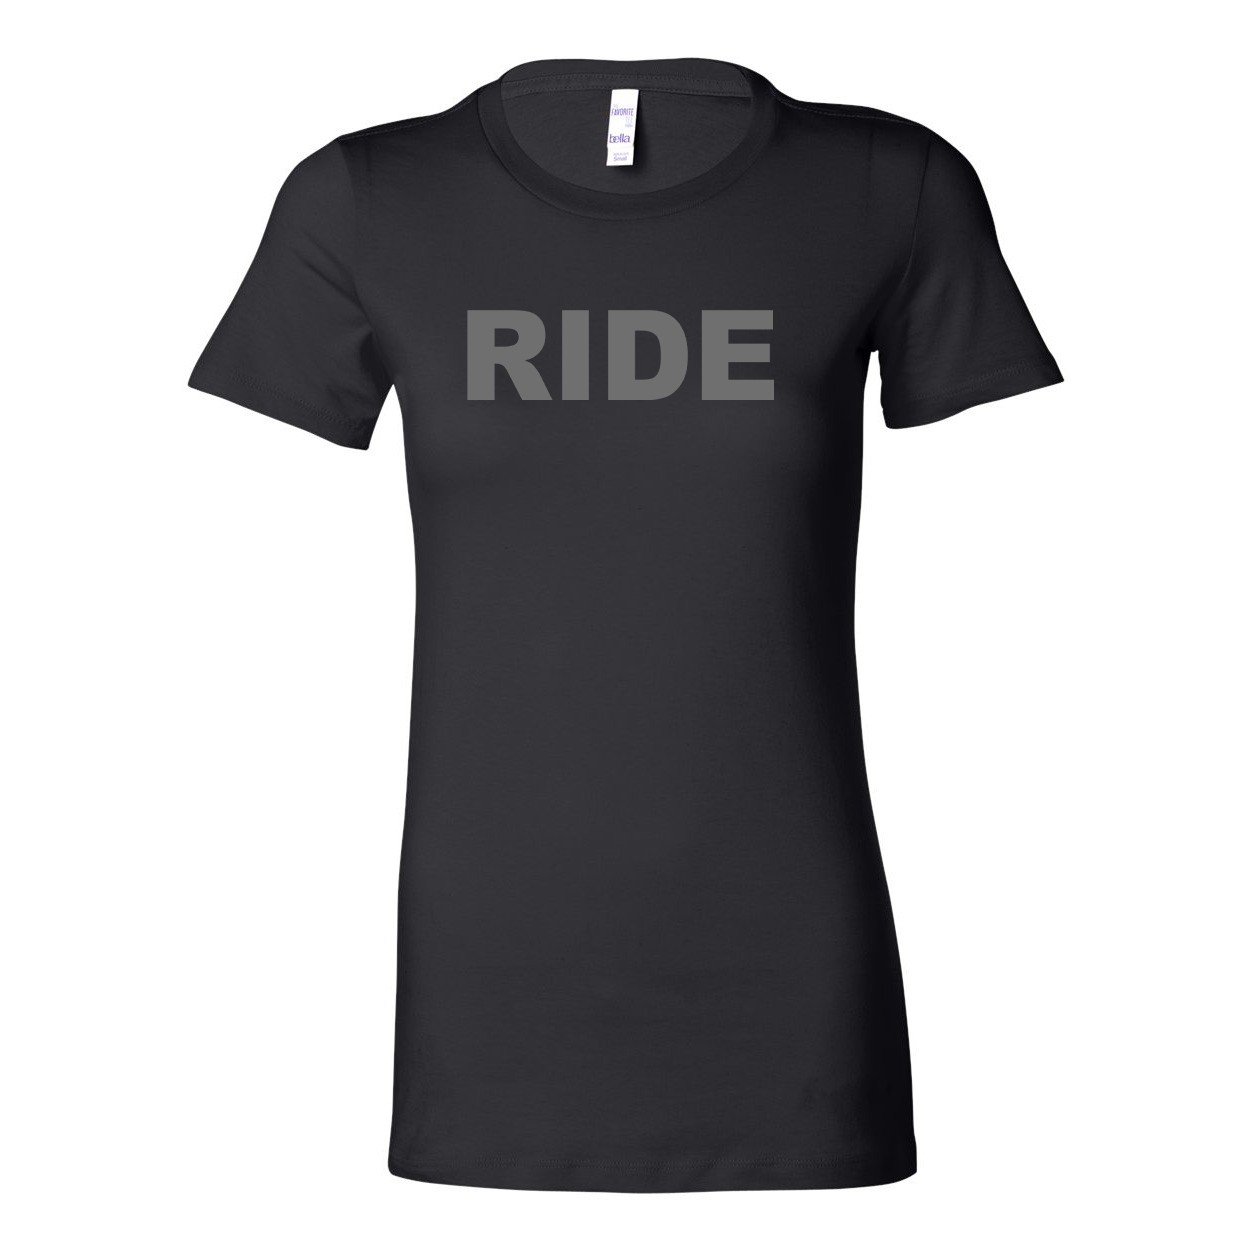 Ride Brand Logo Women's Classic Fitted Tri-Blend T-Shirt Black (Gray Logo)